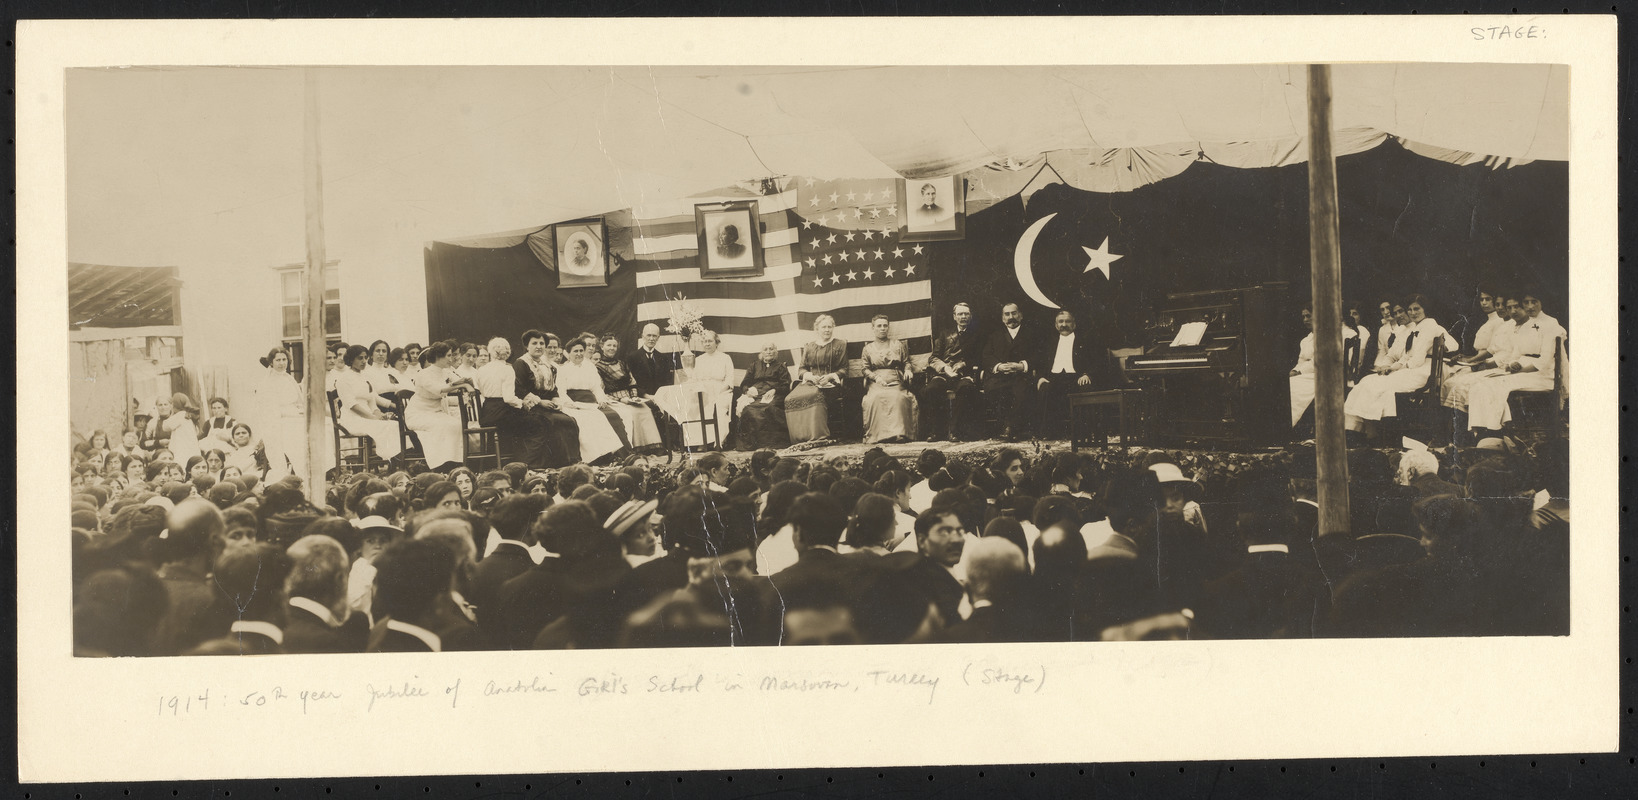 1914: 50th year jubilee of Anatolia Girls' School in Marsovan, Turkey (stage)